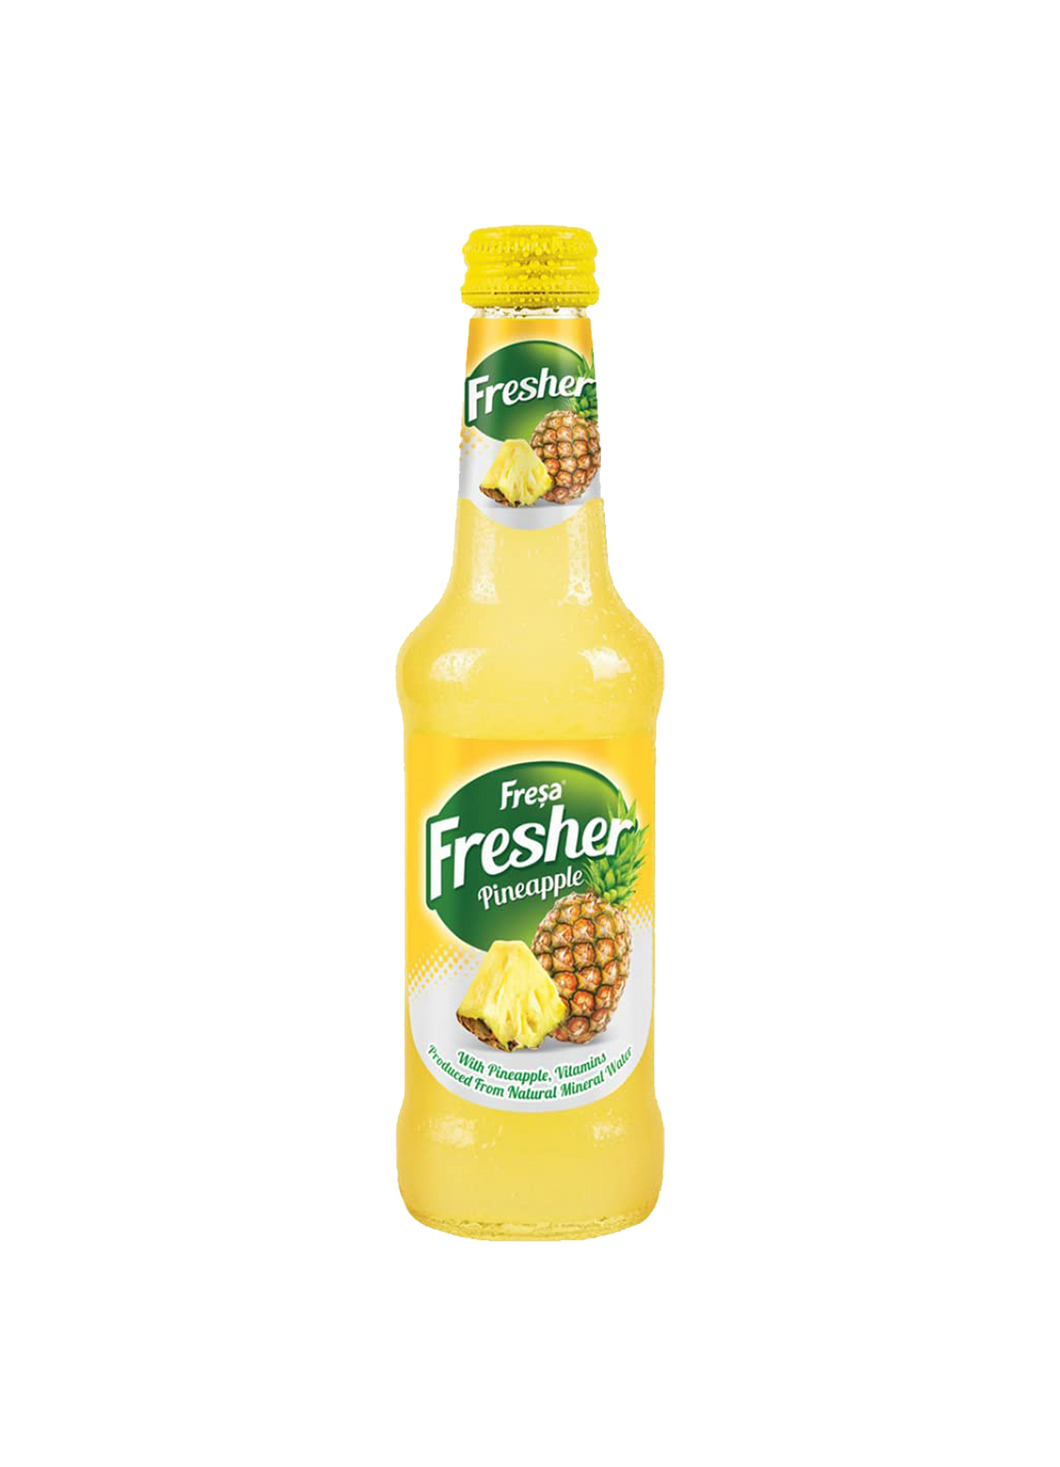 Fresa Fresher Sparkling Pineapple Flavored Drink 250ml